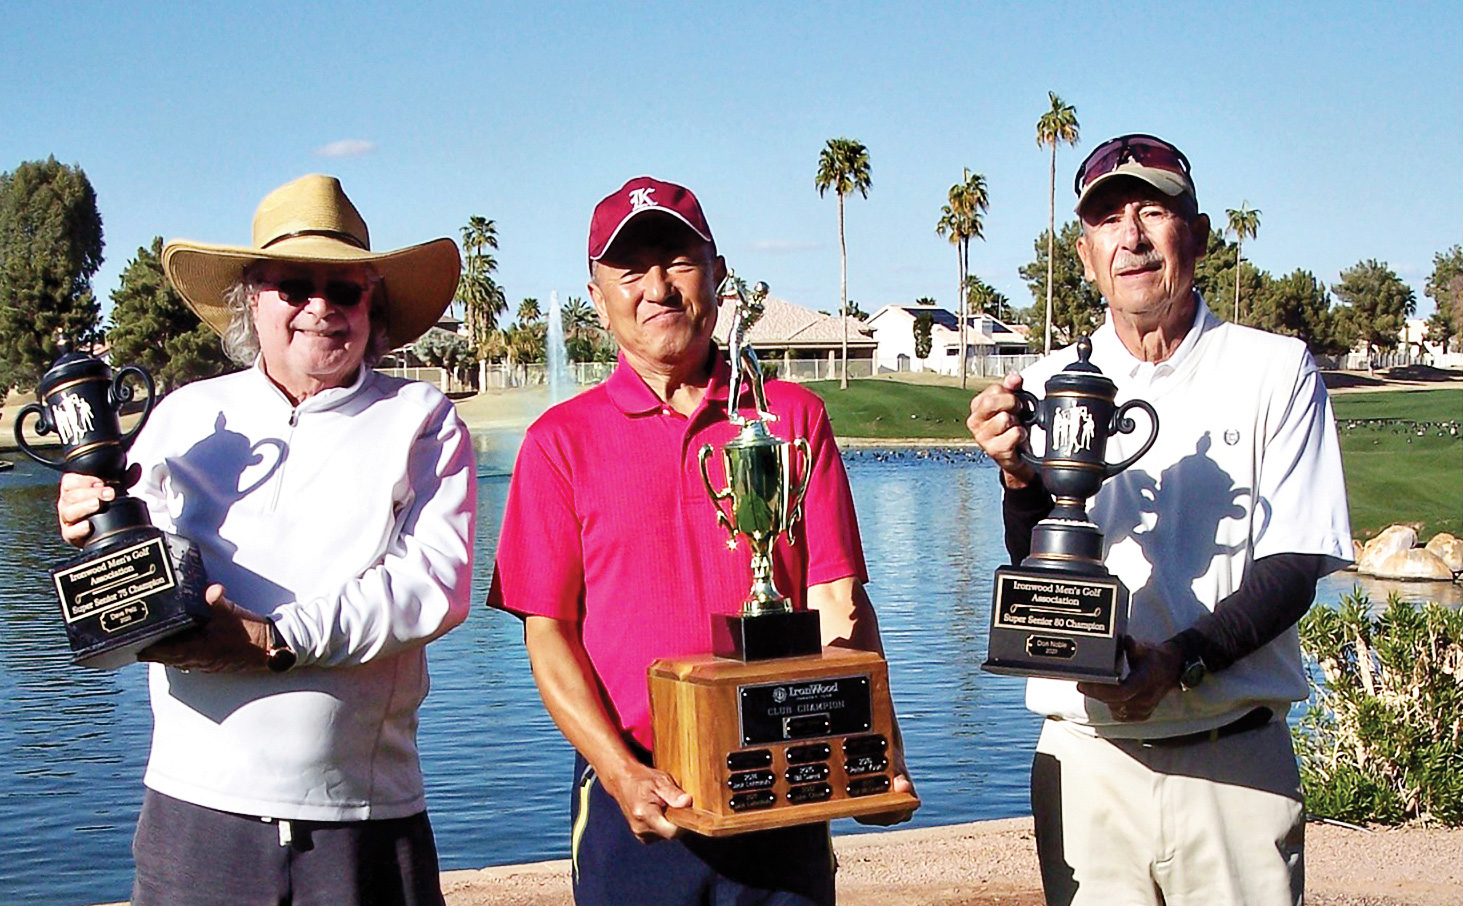 2021 IMGA Club Champions (left to right): Dave Pelz (Super Seniors 75), Peter Yoon (Club Champion), and Don Noble (Super Seniors 80)